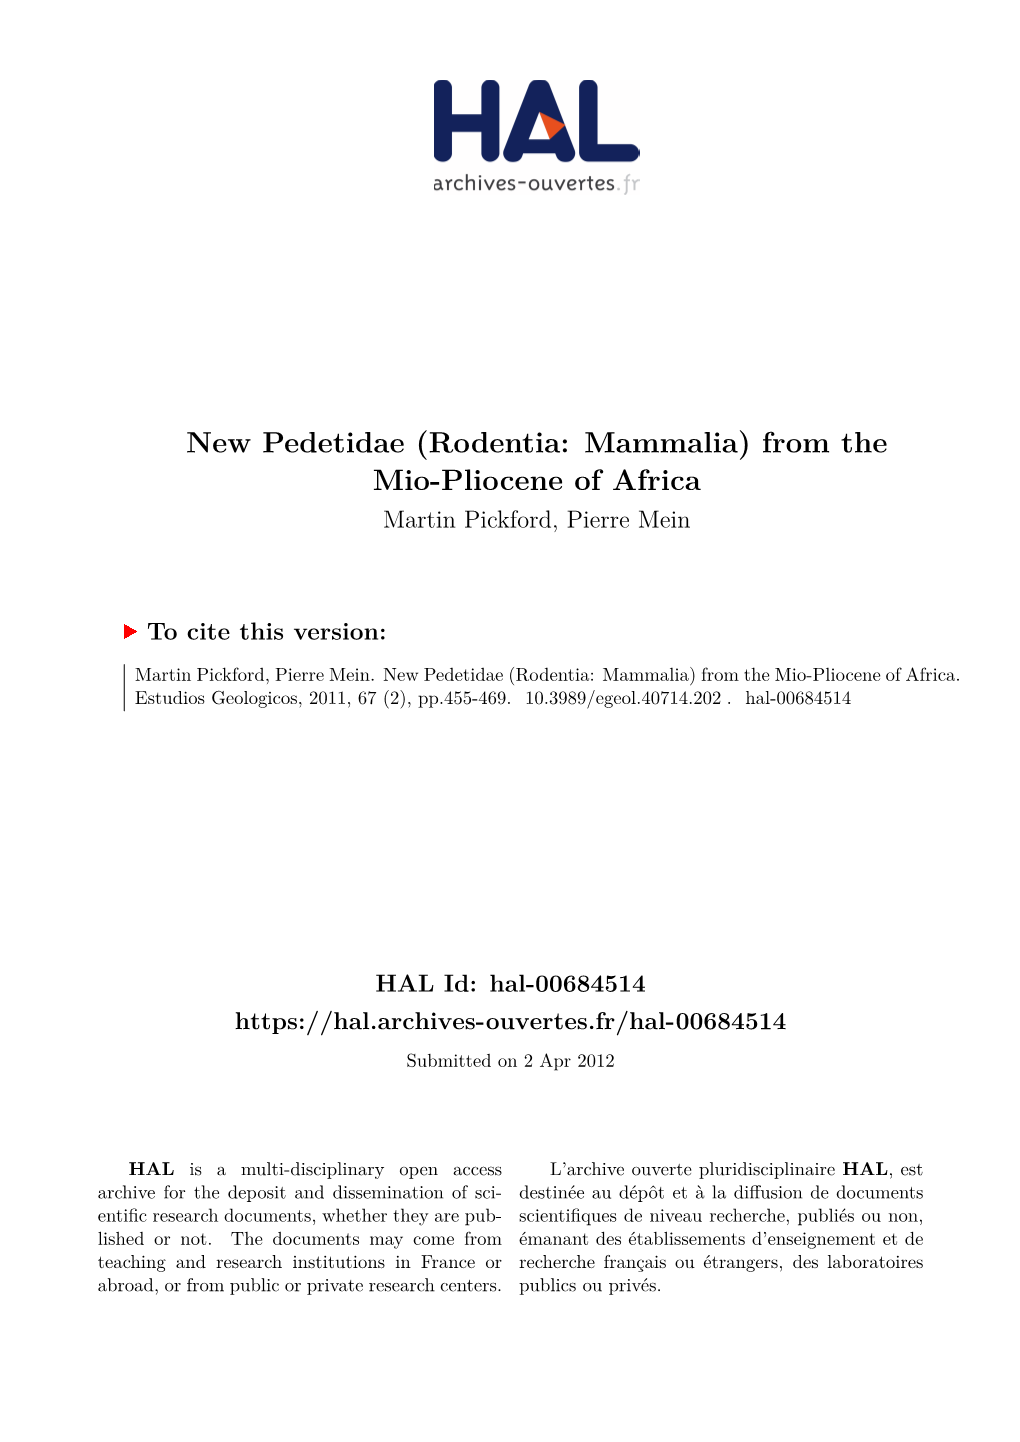 New Pedetidae (Rodentia: Mammalia) from the Mio-Pliocene of Africa Martin Pickford, Pierre Mein